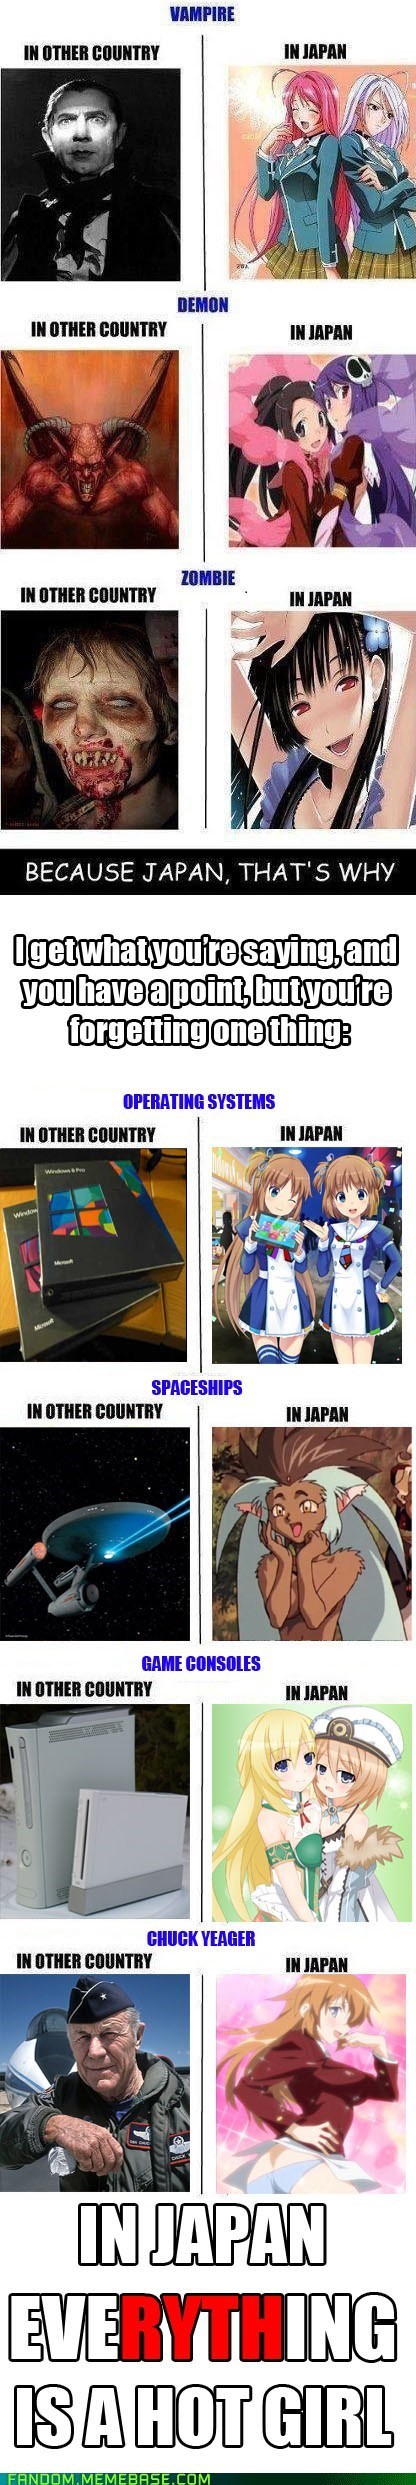 JAPAN FTW XD - meme